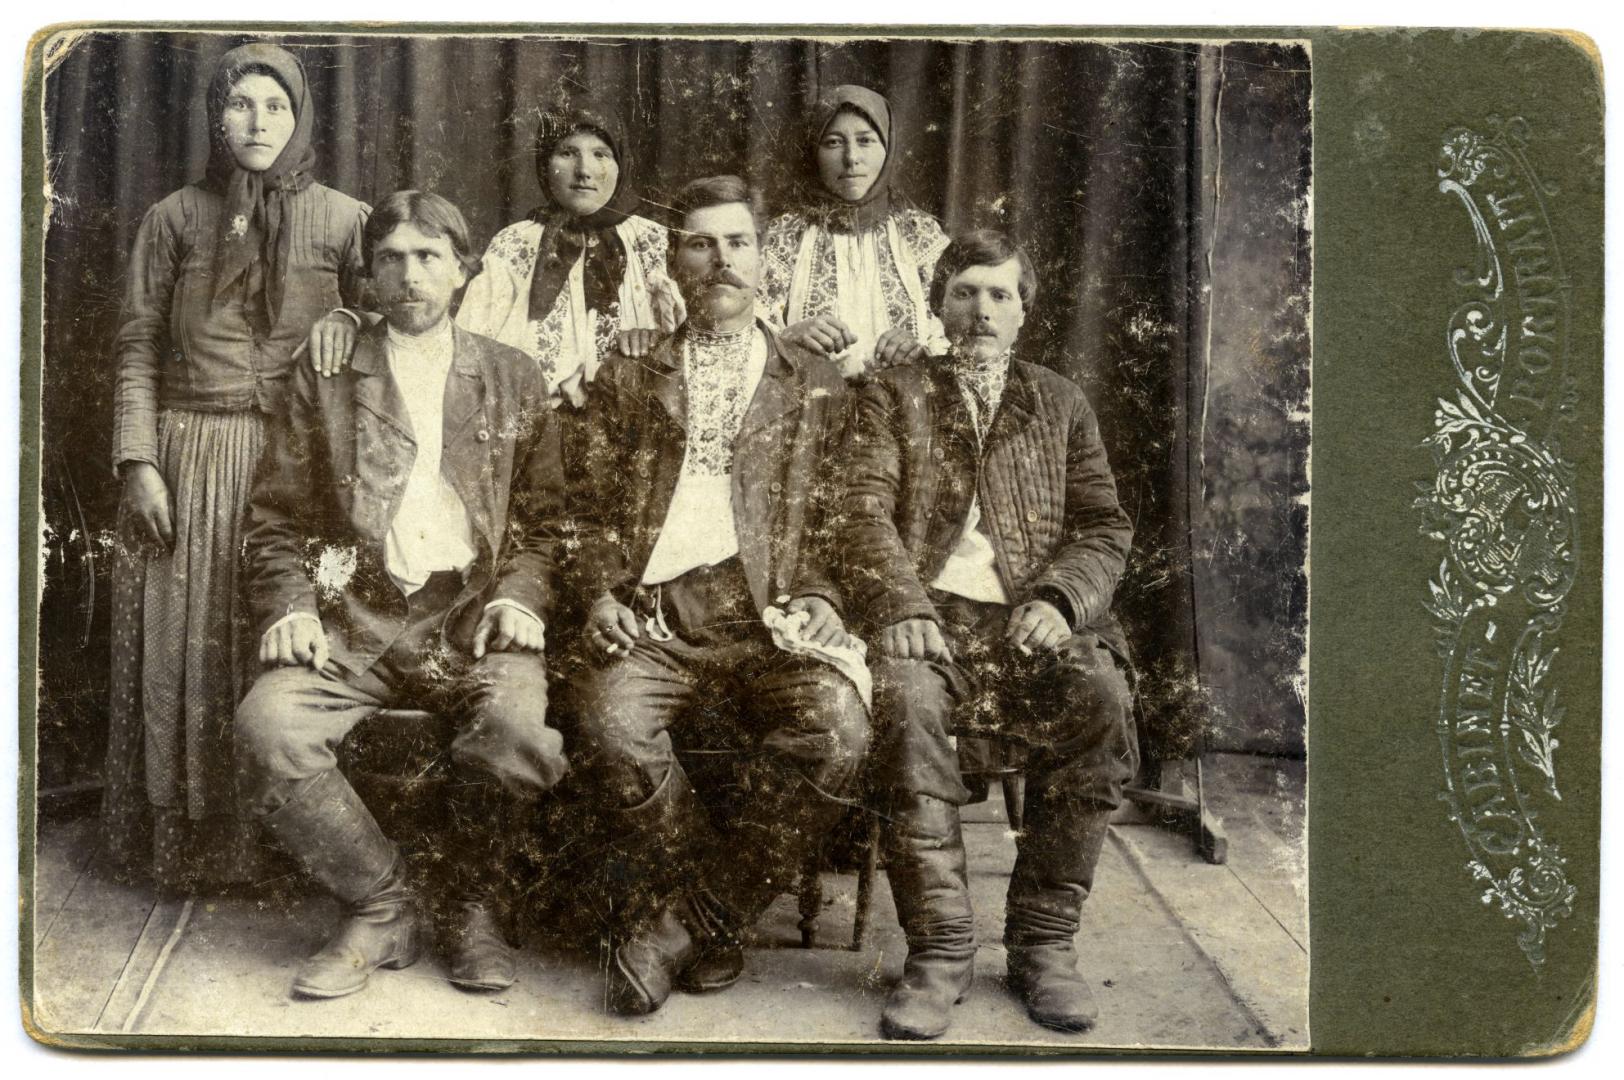 Photo. Men and women wearing folk attire